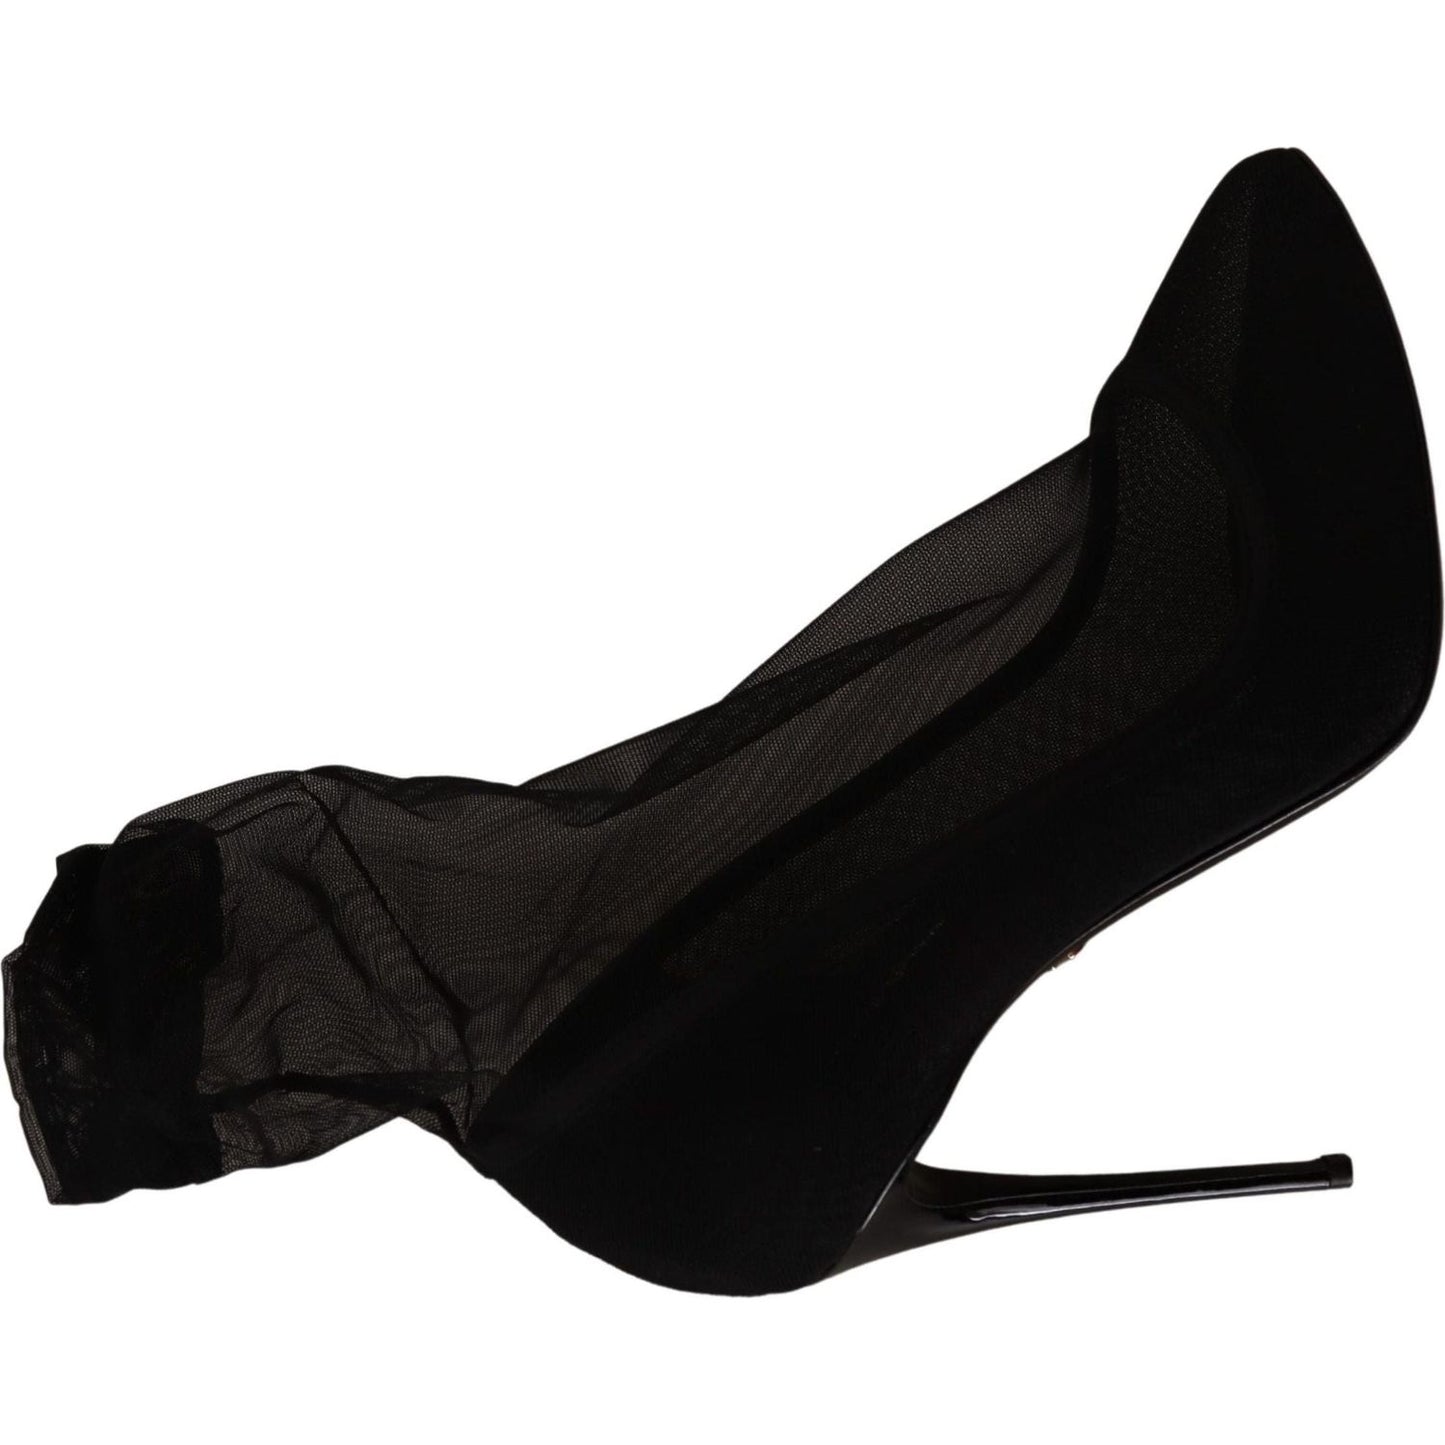 Dolce & Gabbana Elegant Black Stretch Socks Boots black-tulle-stretch-boots-pumps-shoes